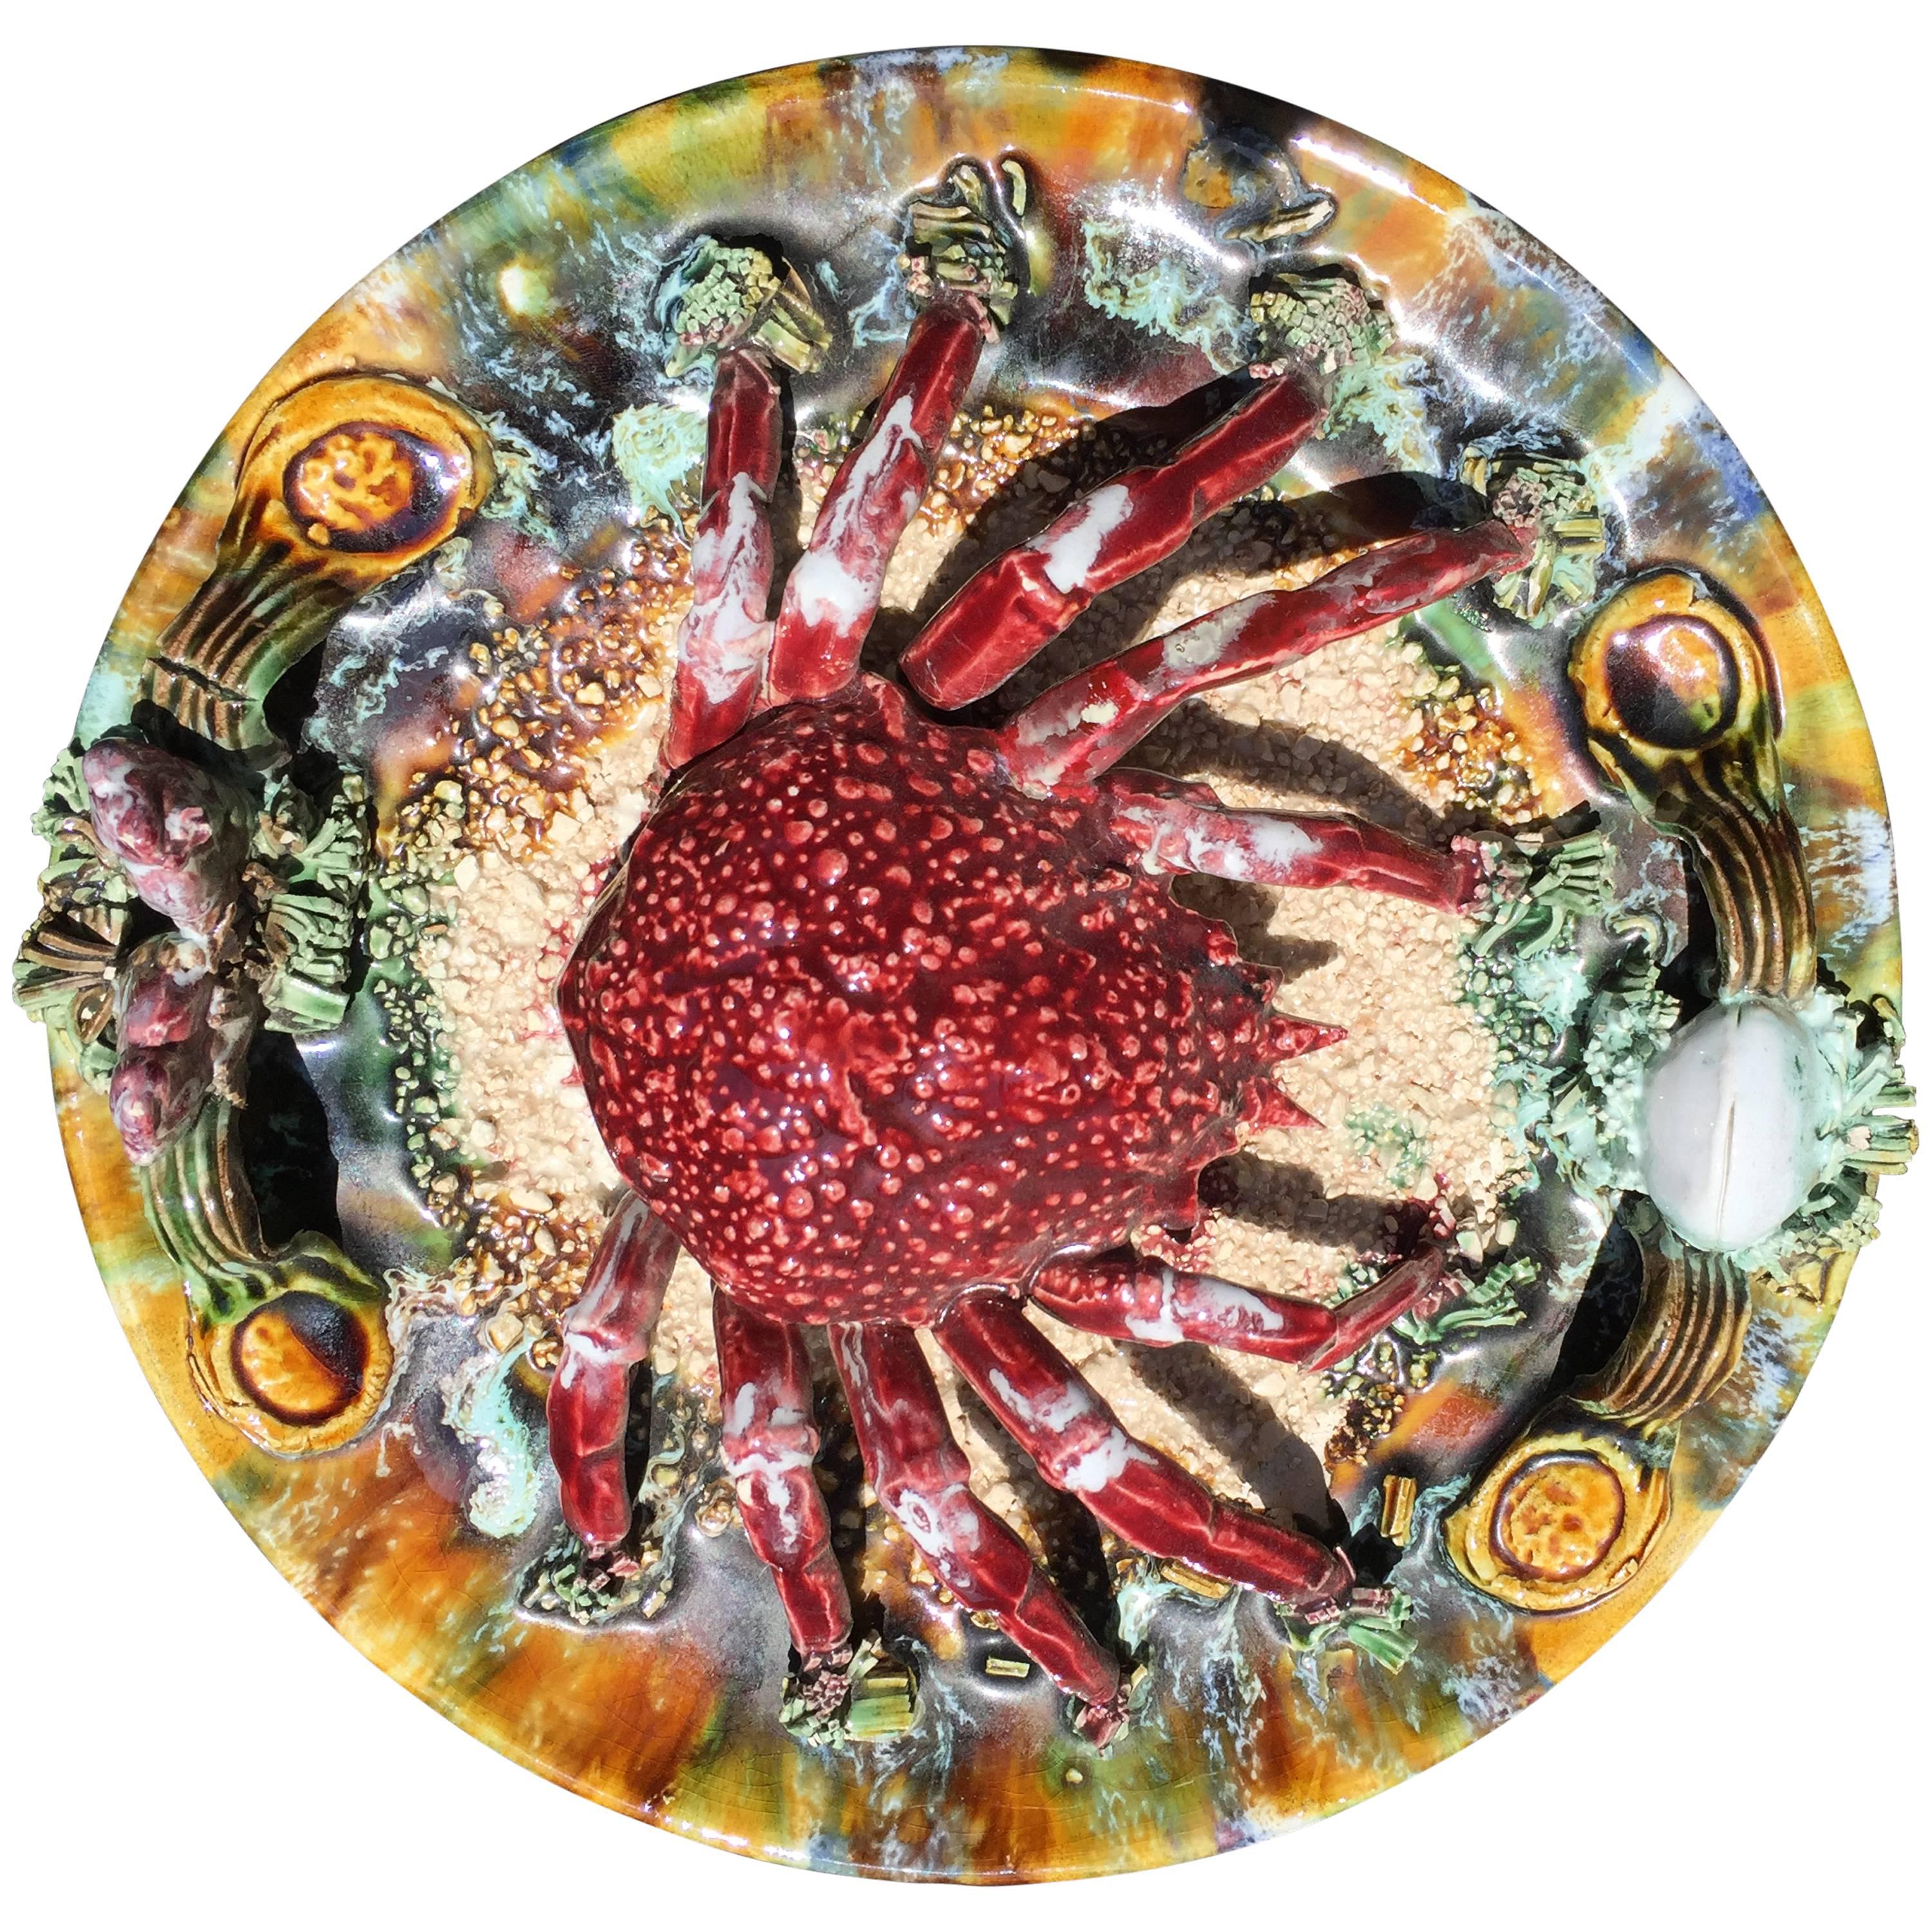 Crab Colorful Raised Relief Nautical Ceramic Plate, Palissy, circa 1920-1940